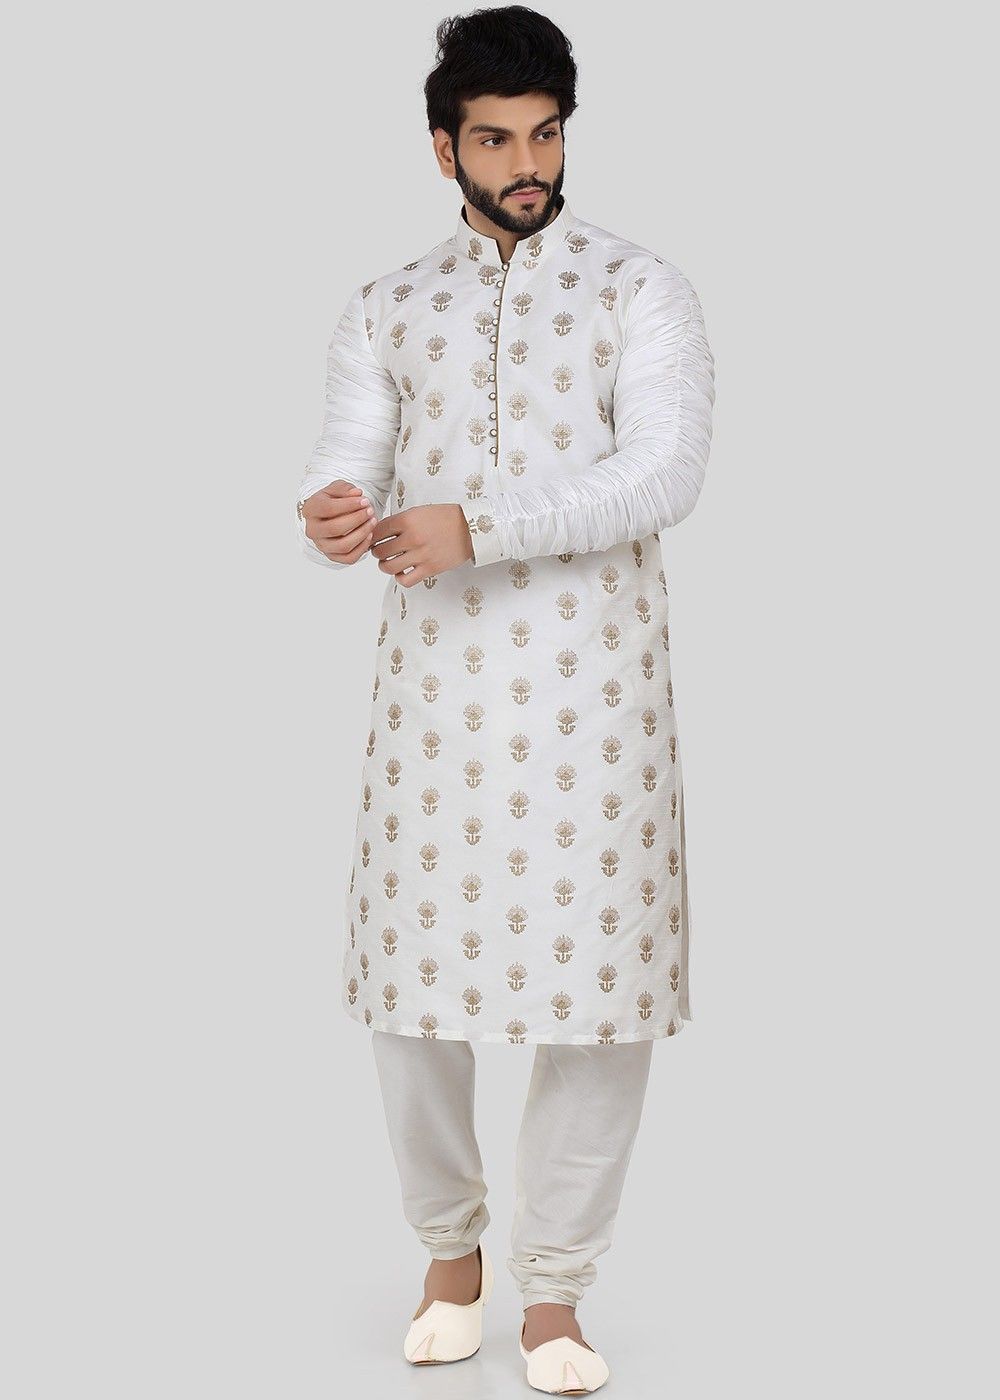 White Cotton Kurta Men Indian Clothing Fashion Shirt Embroidered Men Kurta 